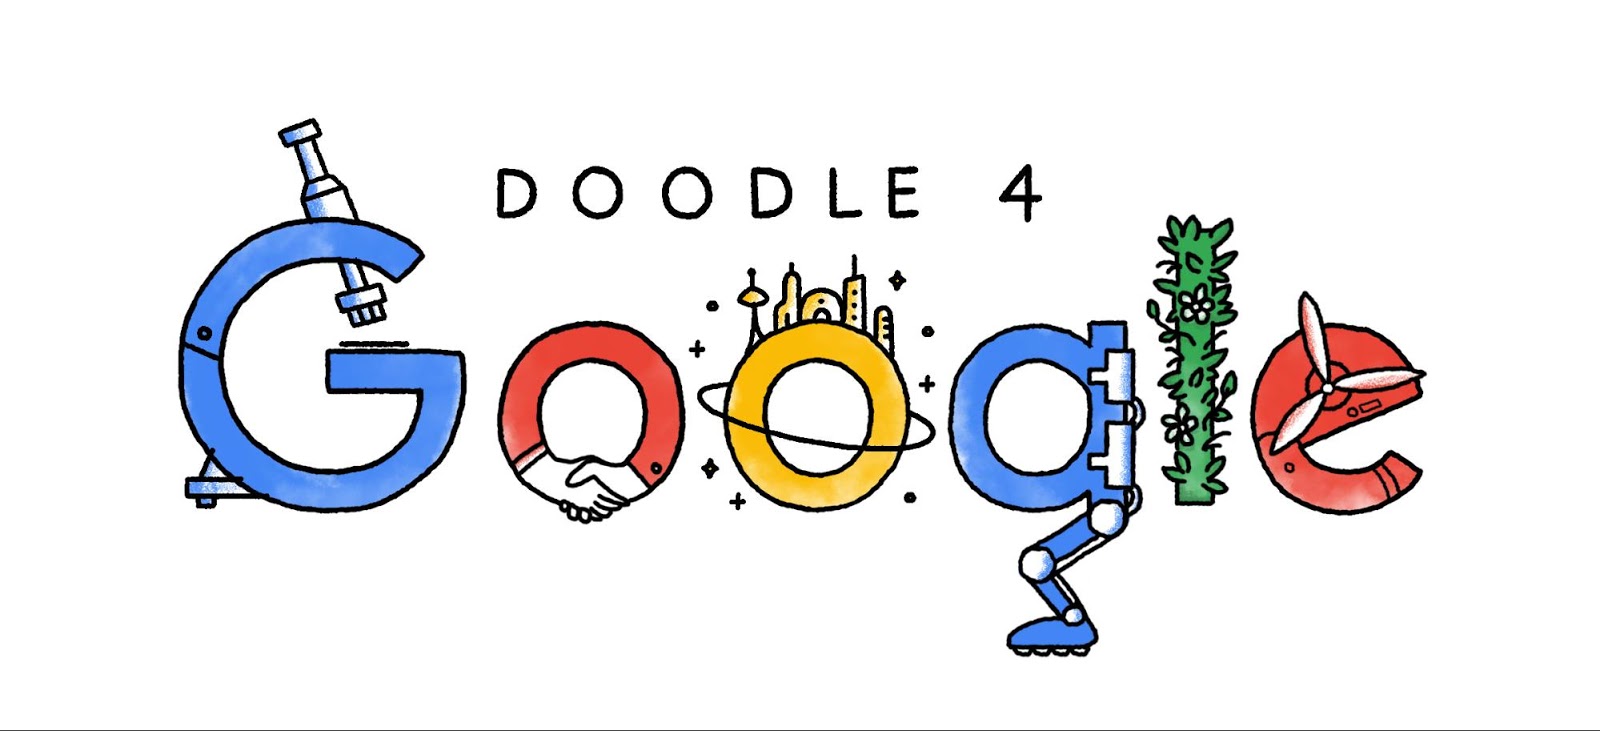 Official Google Blog The 2010 Doodle 4 Google Winner Makenzie